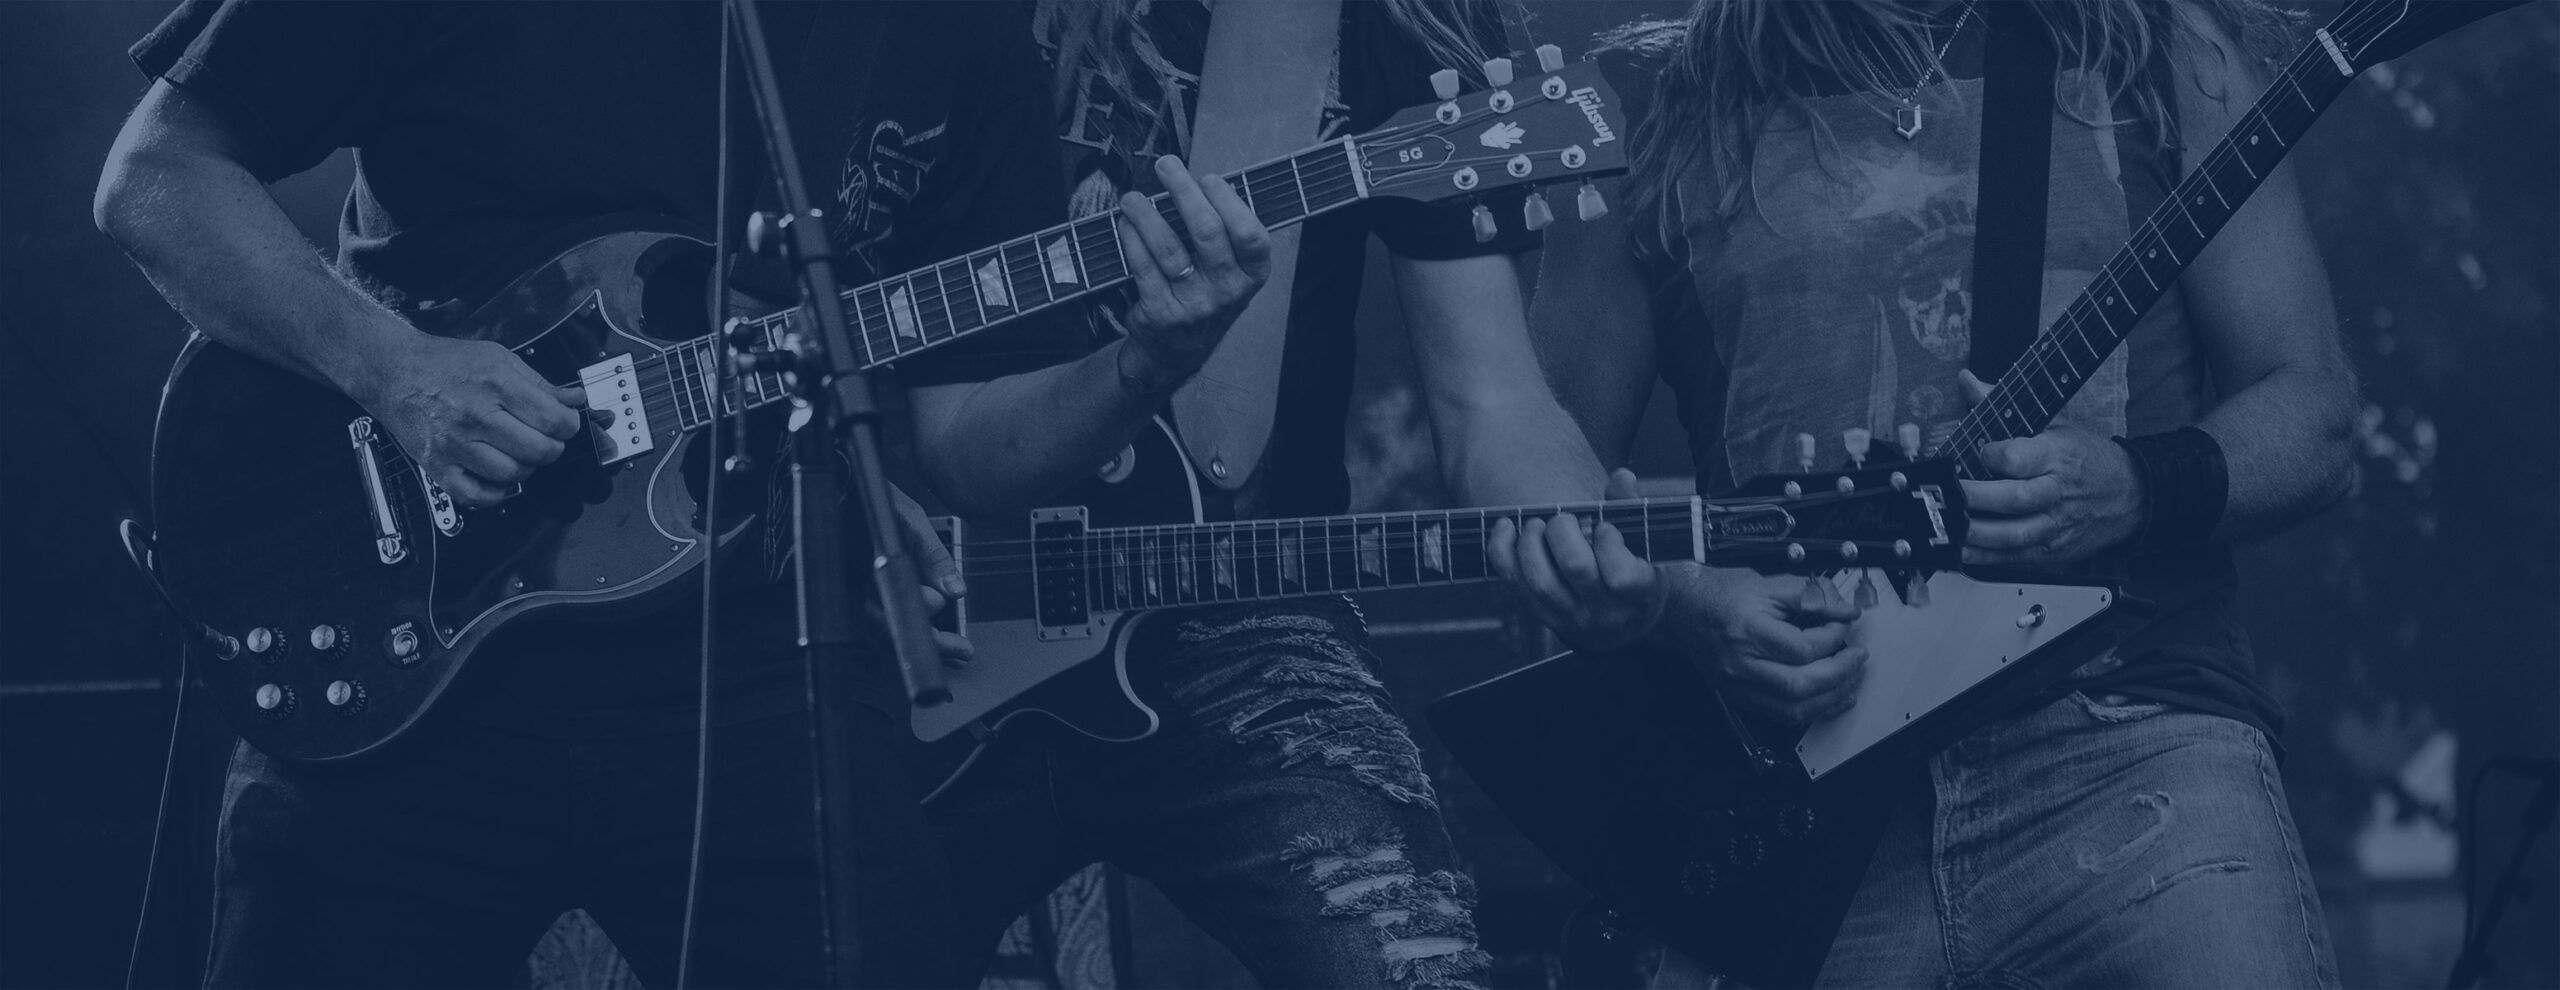 Rock festival, gitarist speelt op een Gibson SG gitaar